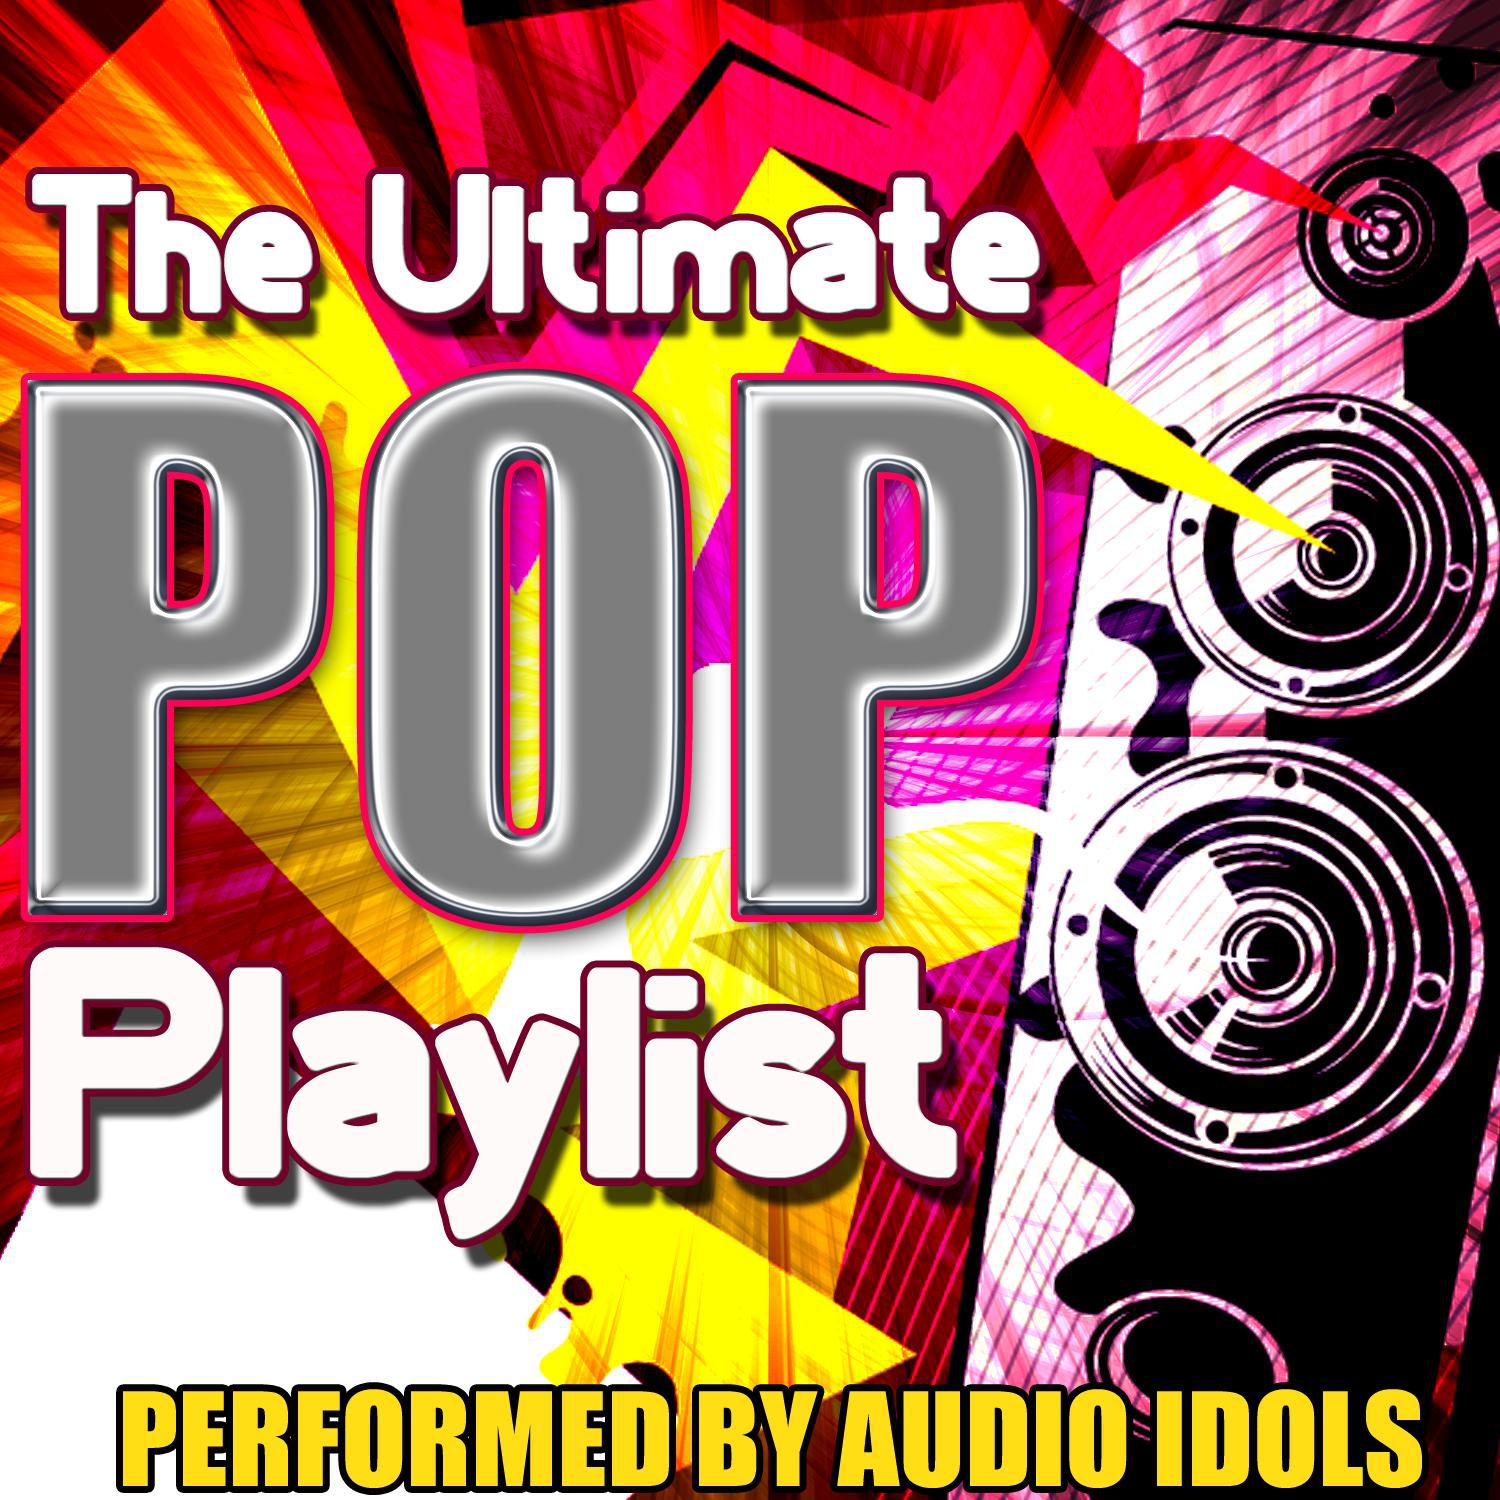 The Ultimate Pop Playlist